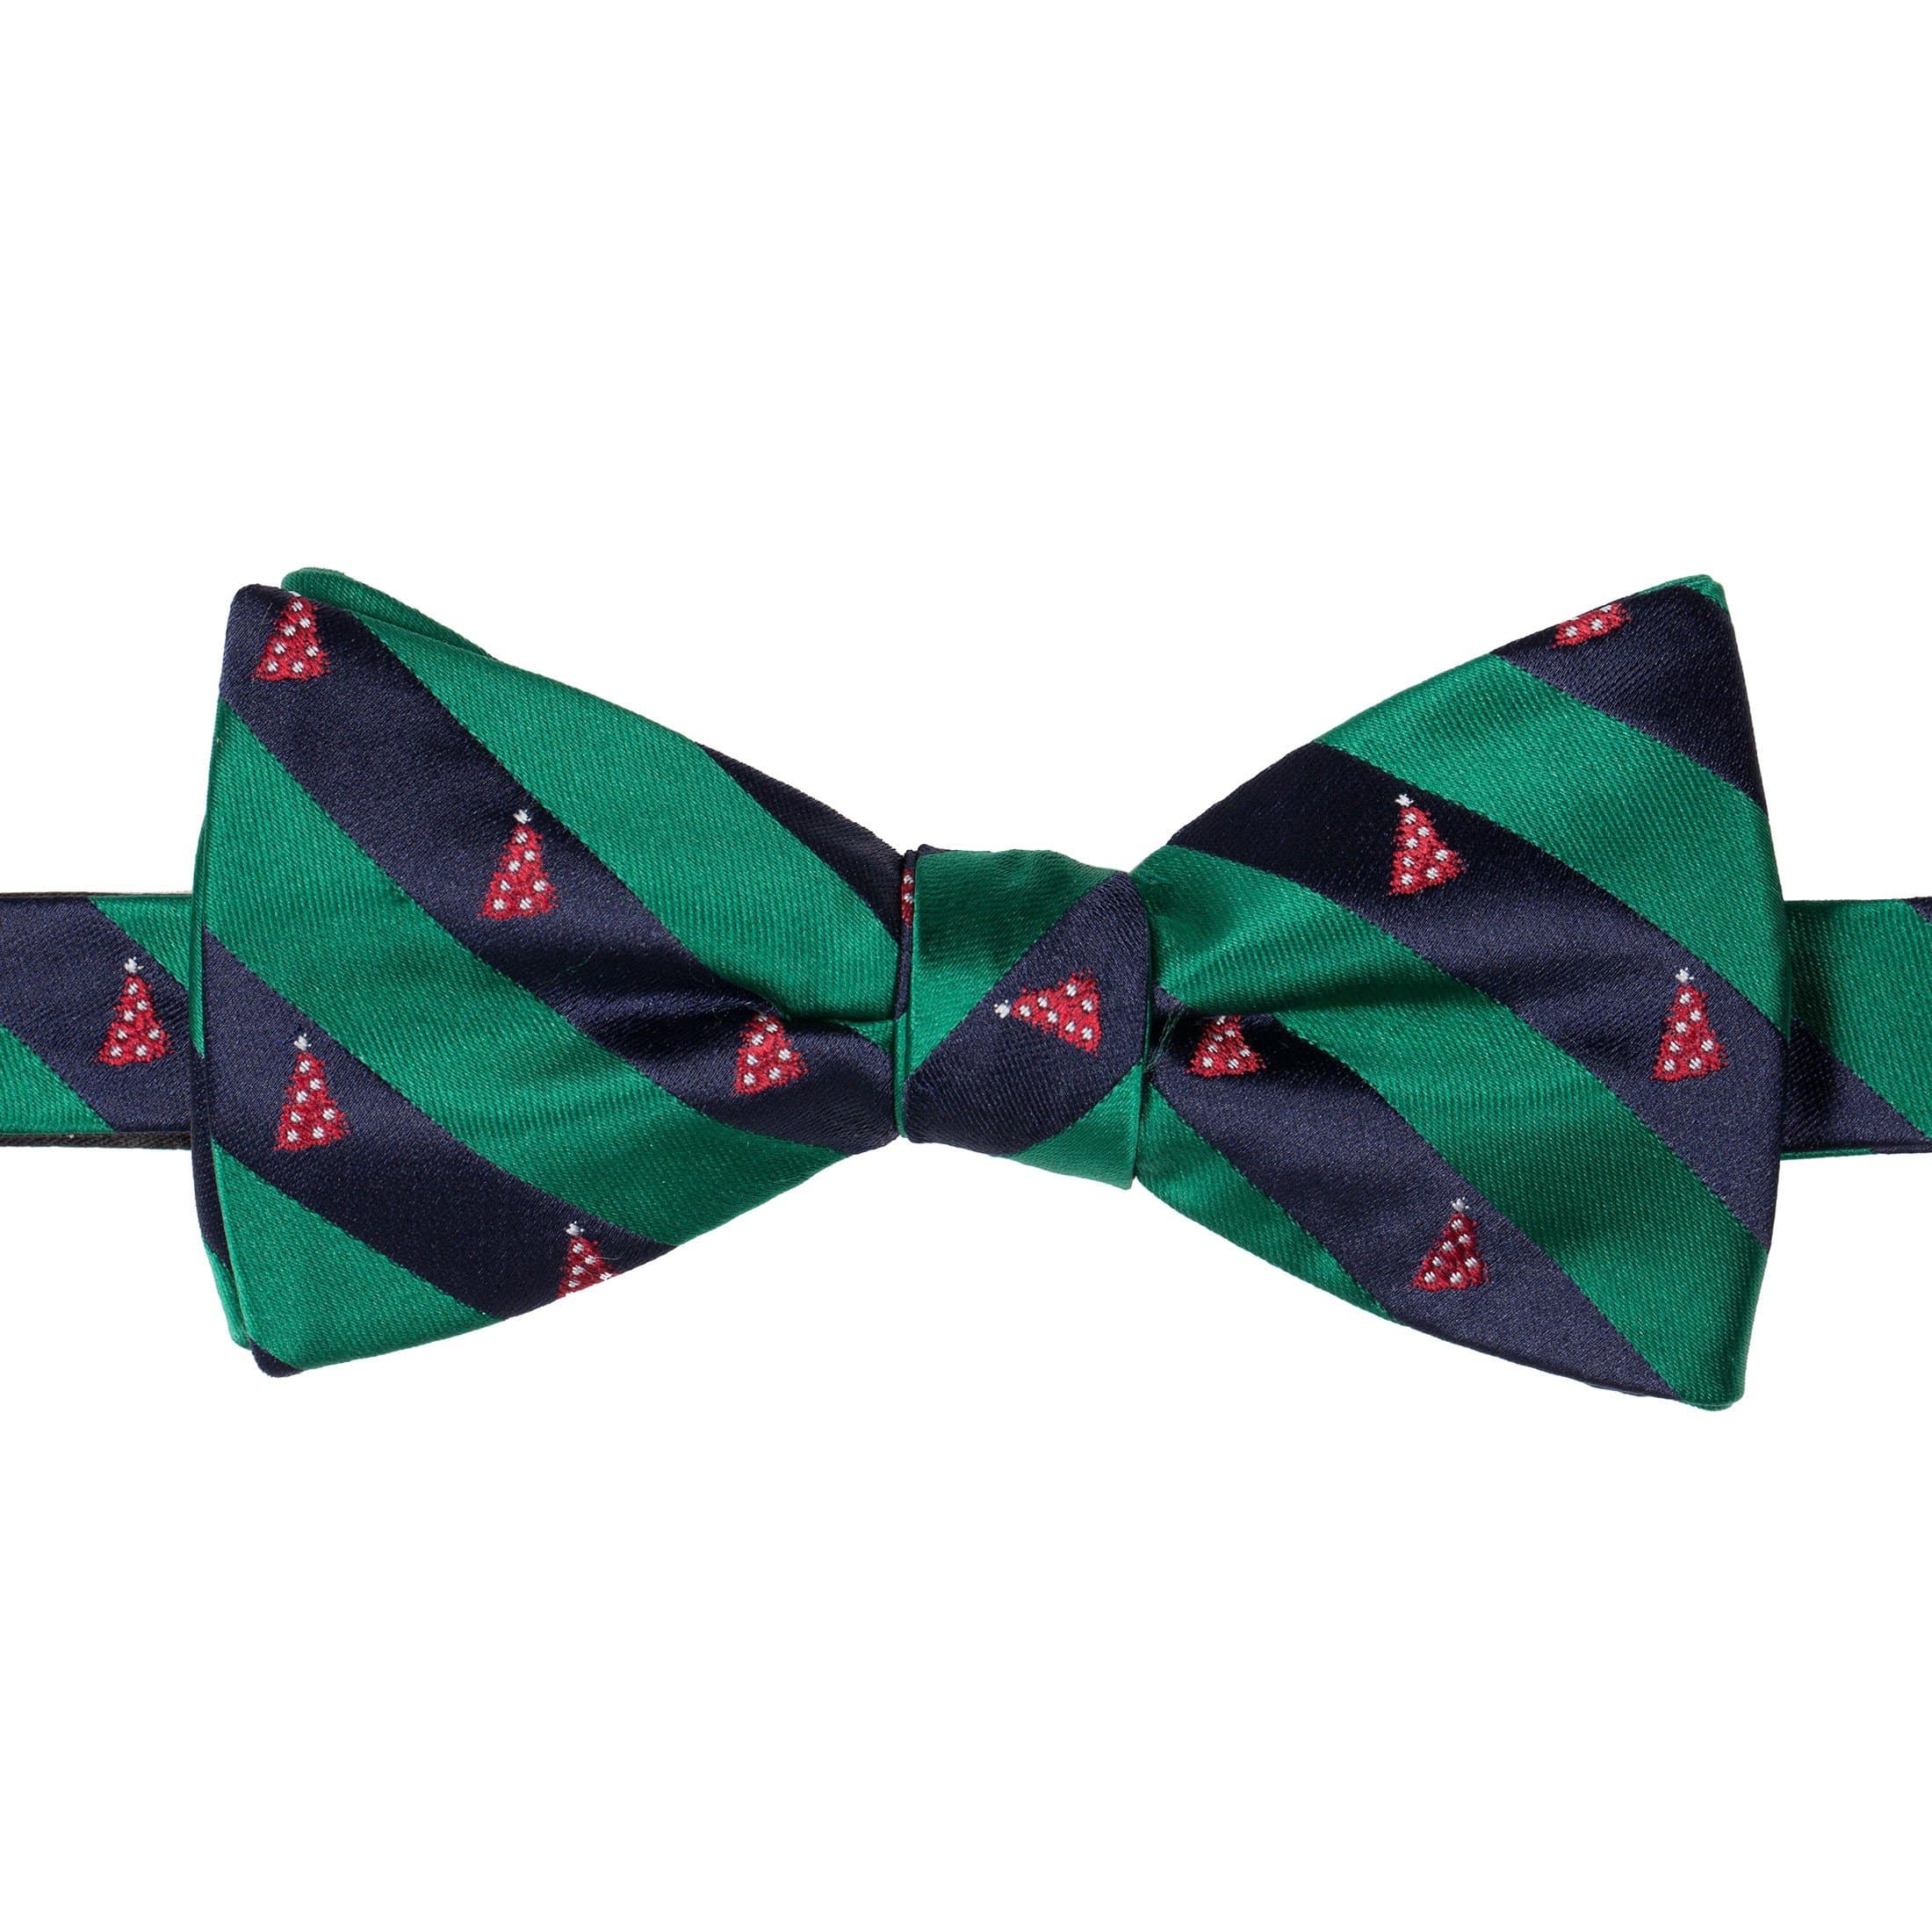 Noel Christmas Bow Tie - Tie, bowtie, pocket square  | Kissties